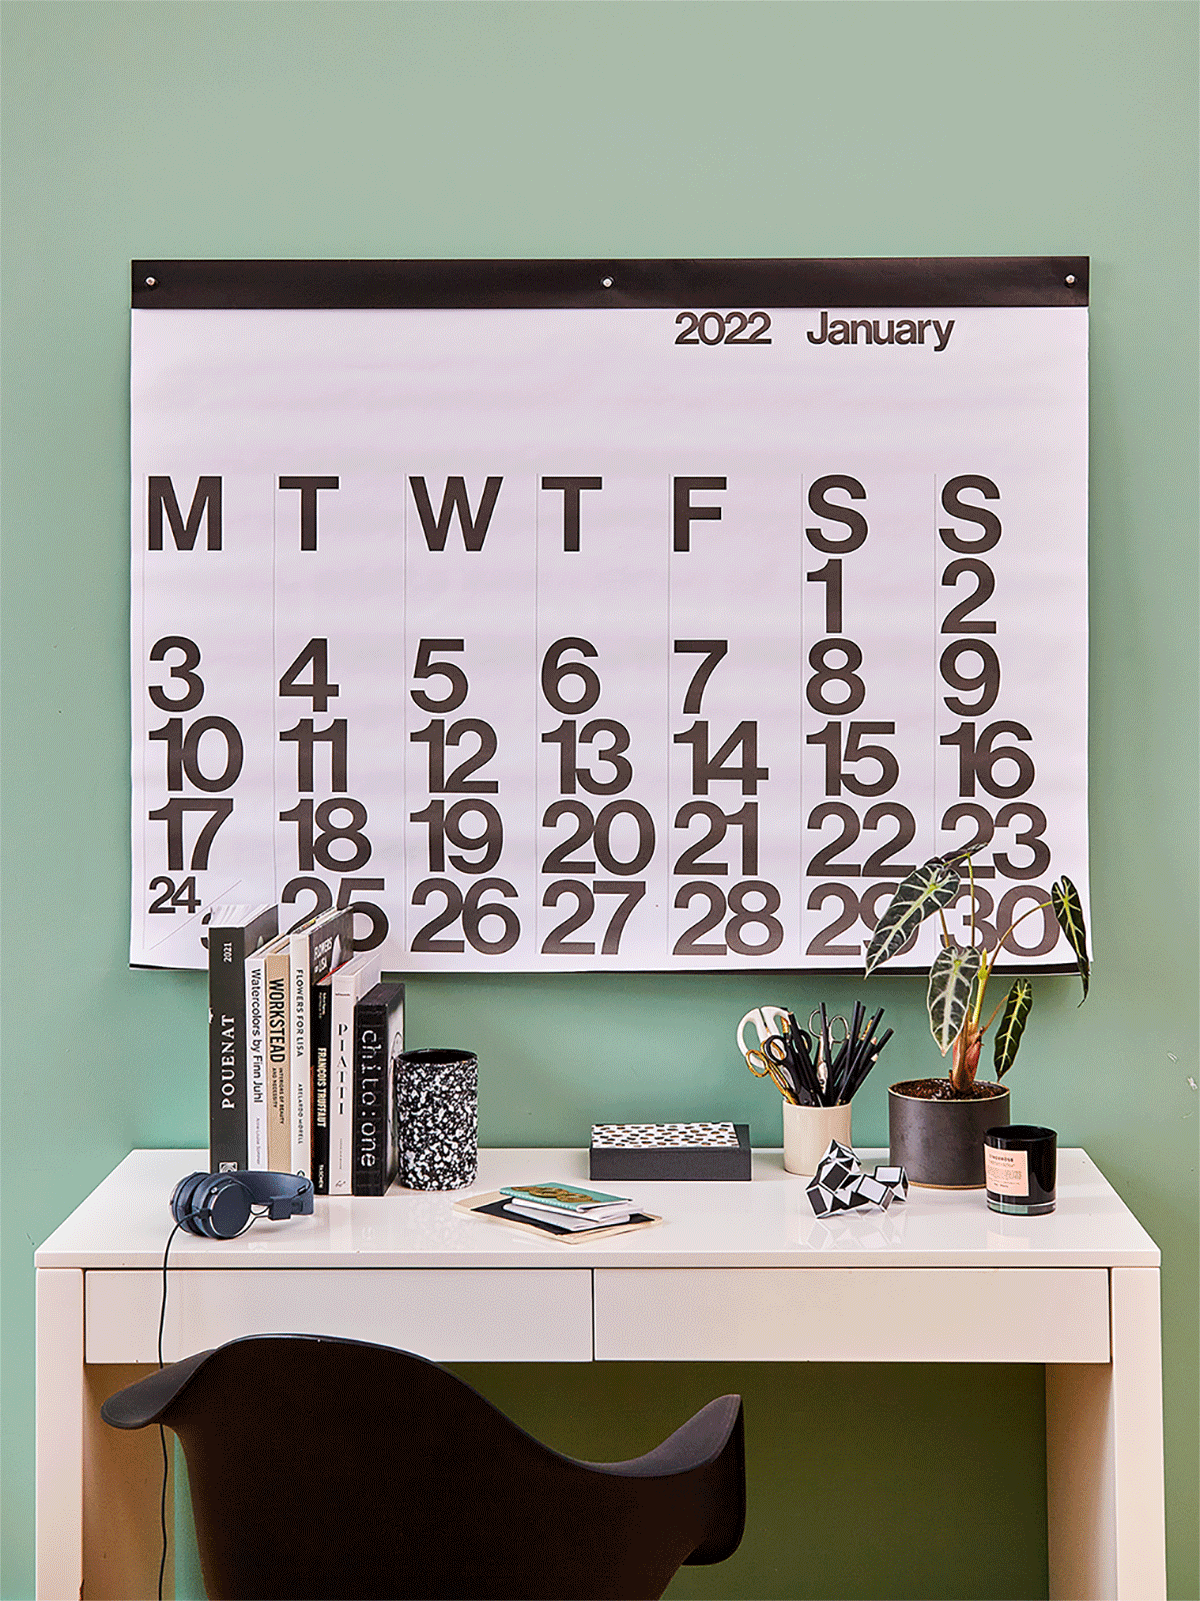 animated image of a wall calendar